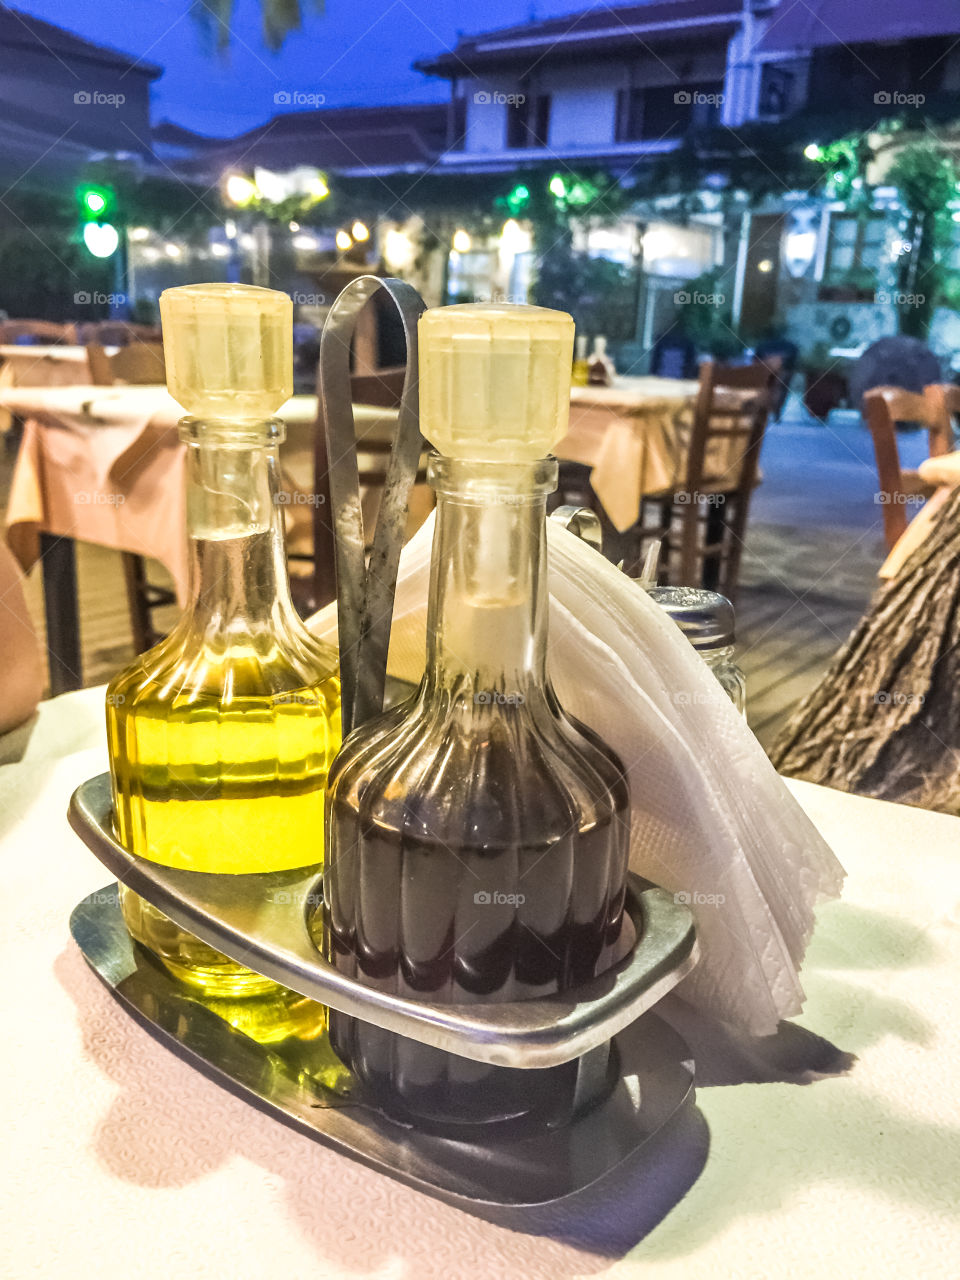 Olive Oil And Vinegar
